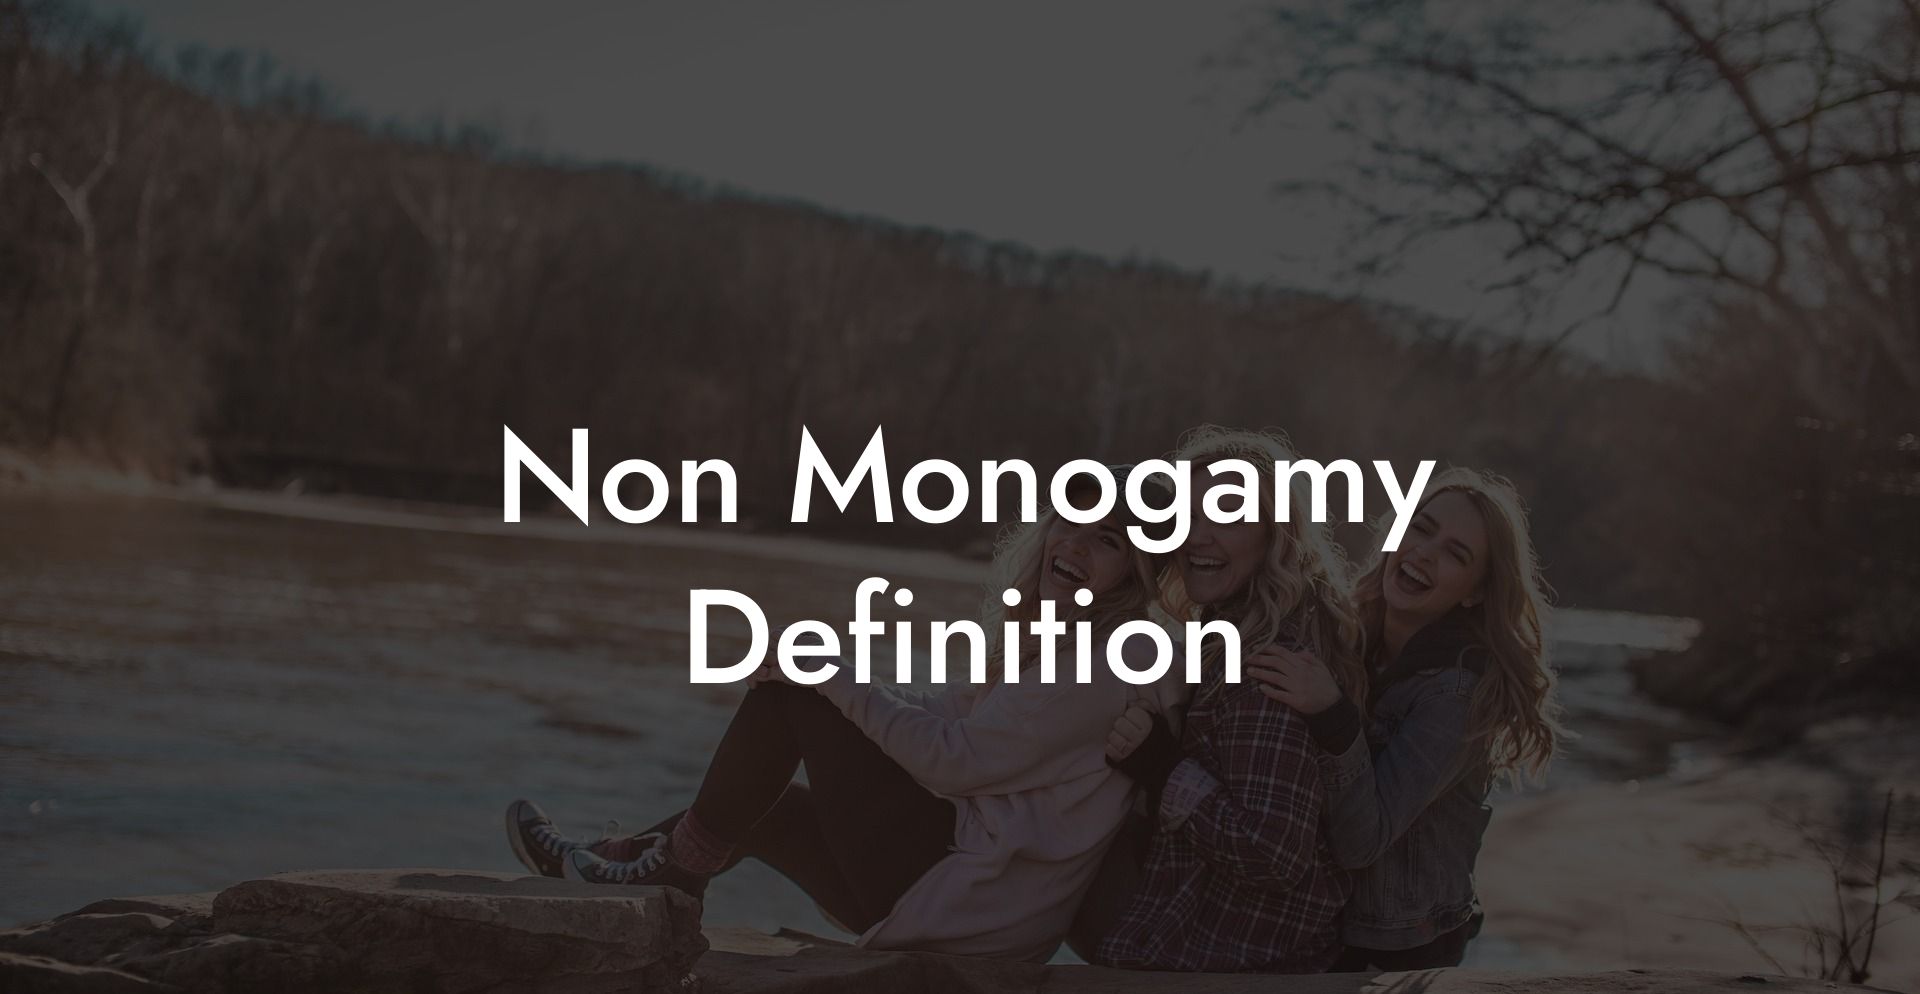 Non Monogamy Definition